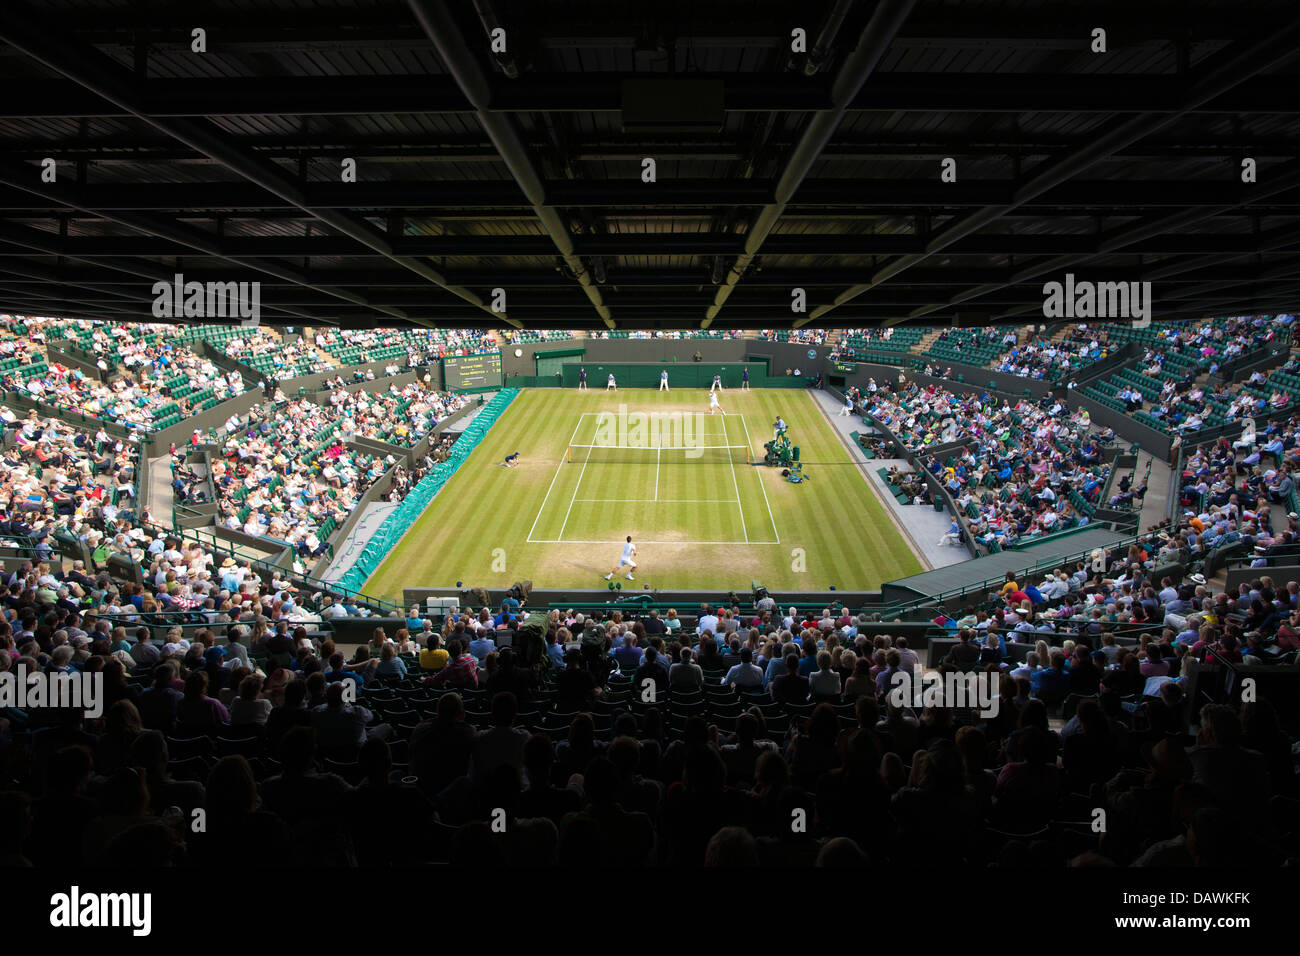 El centro de la cancha en Campeonatos de Tenis de Wimbledon 2013 Foto de stock